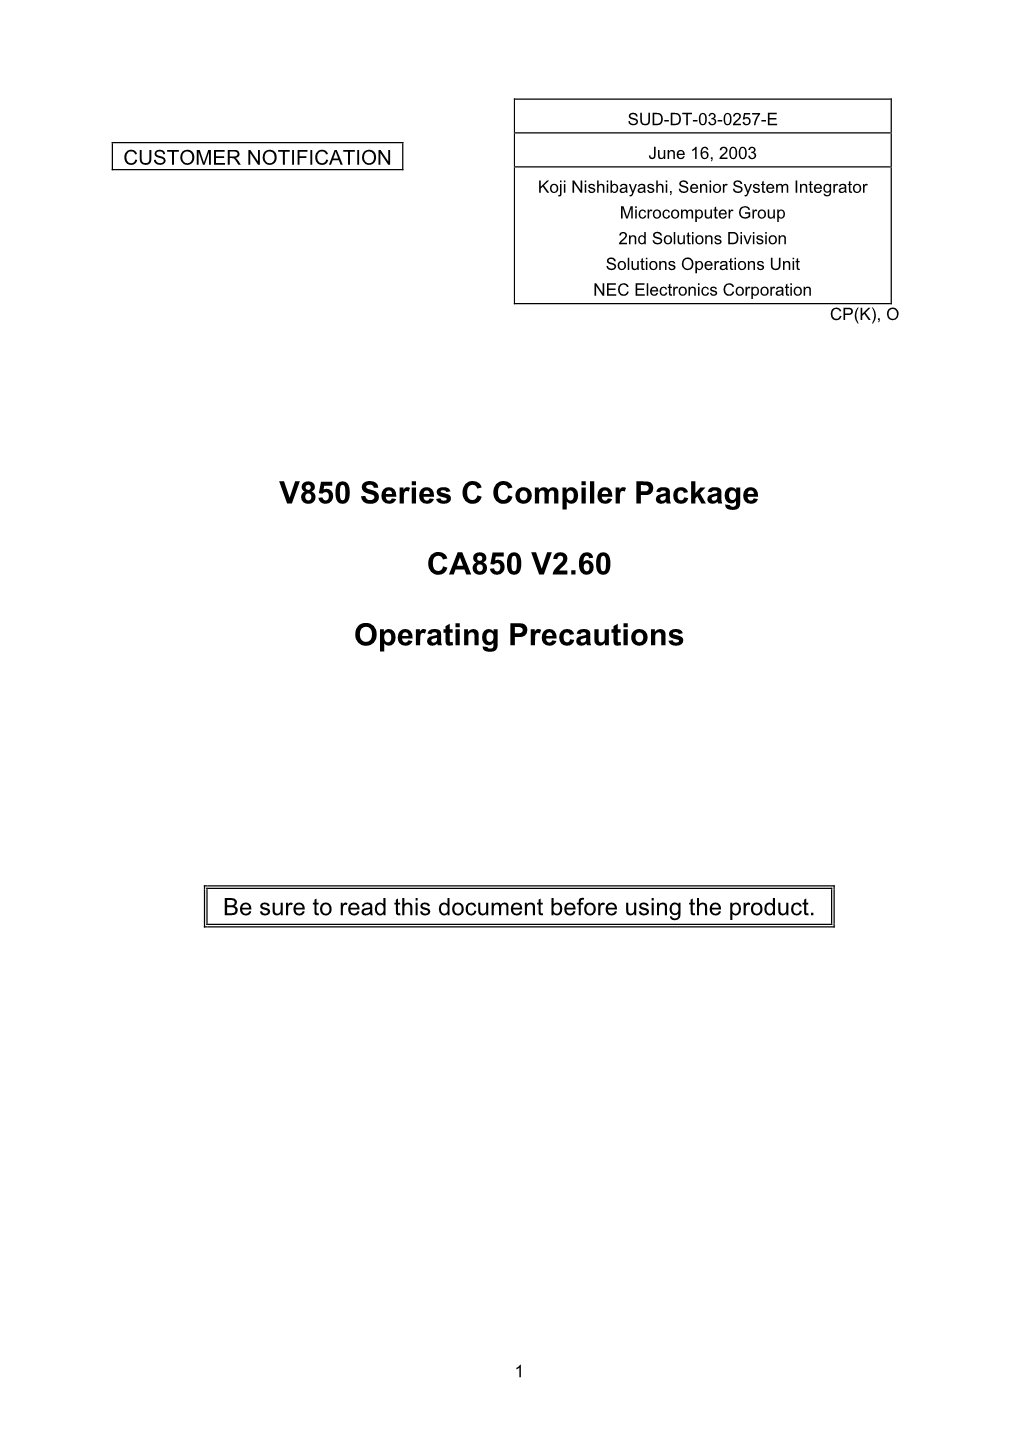 V850 Series C Compiler Package CA850 V2.60 Operating Precautions